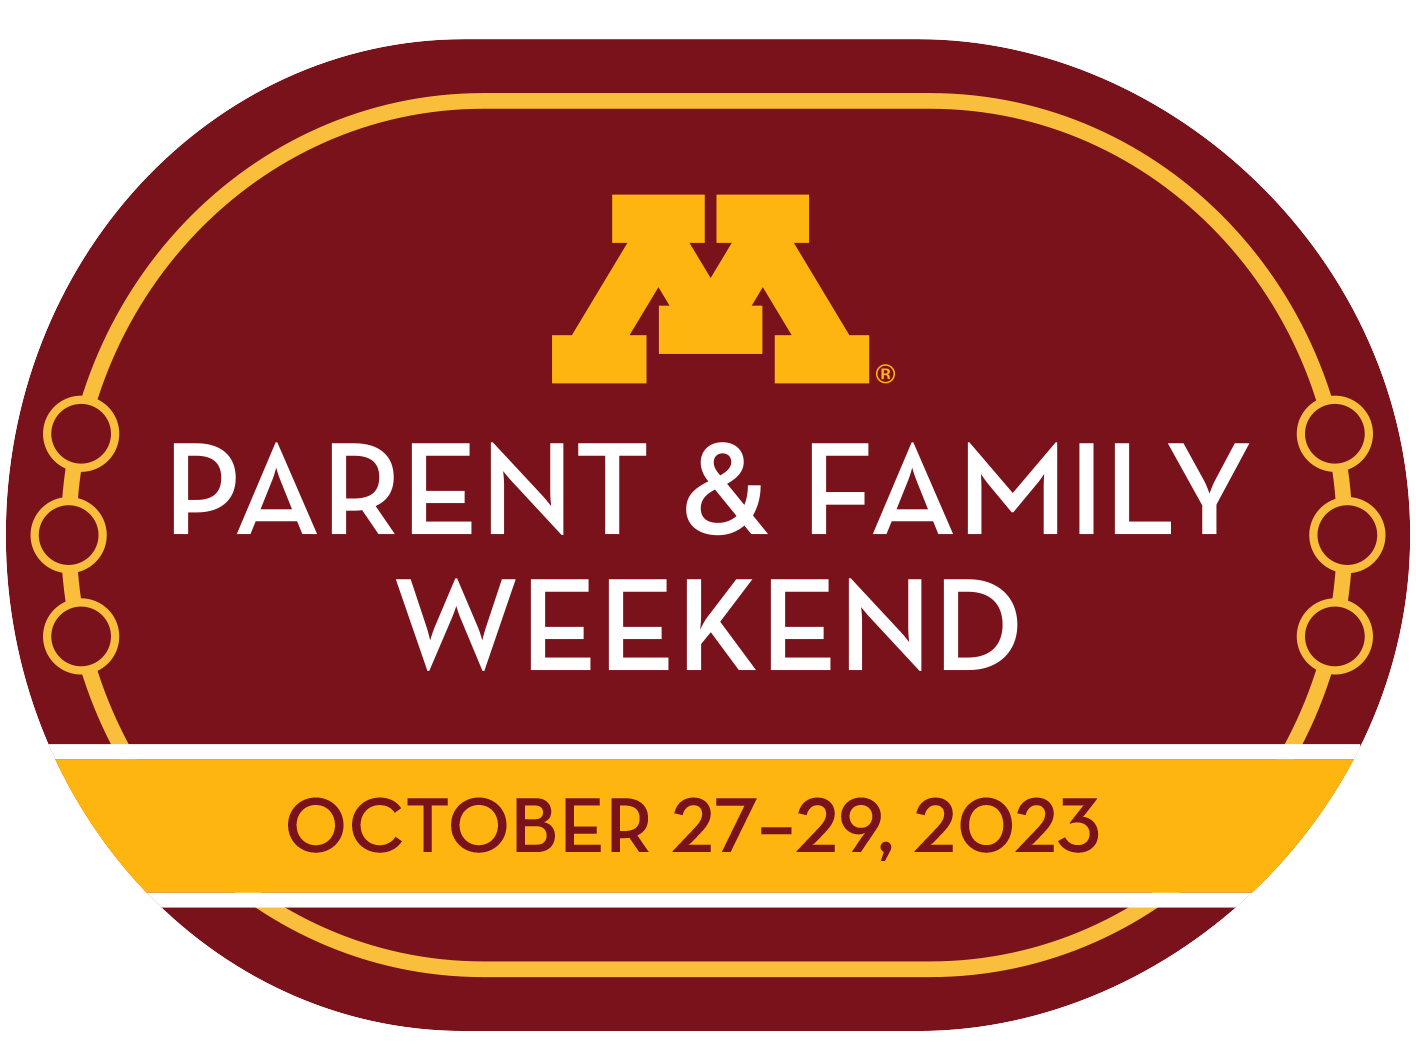 Parent & Family Weekend: October 27-29, 2023